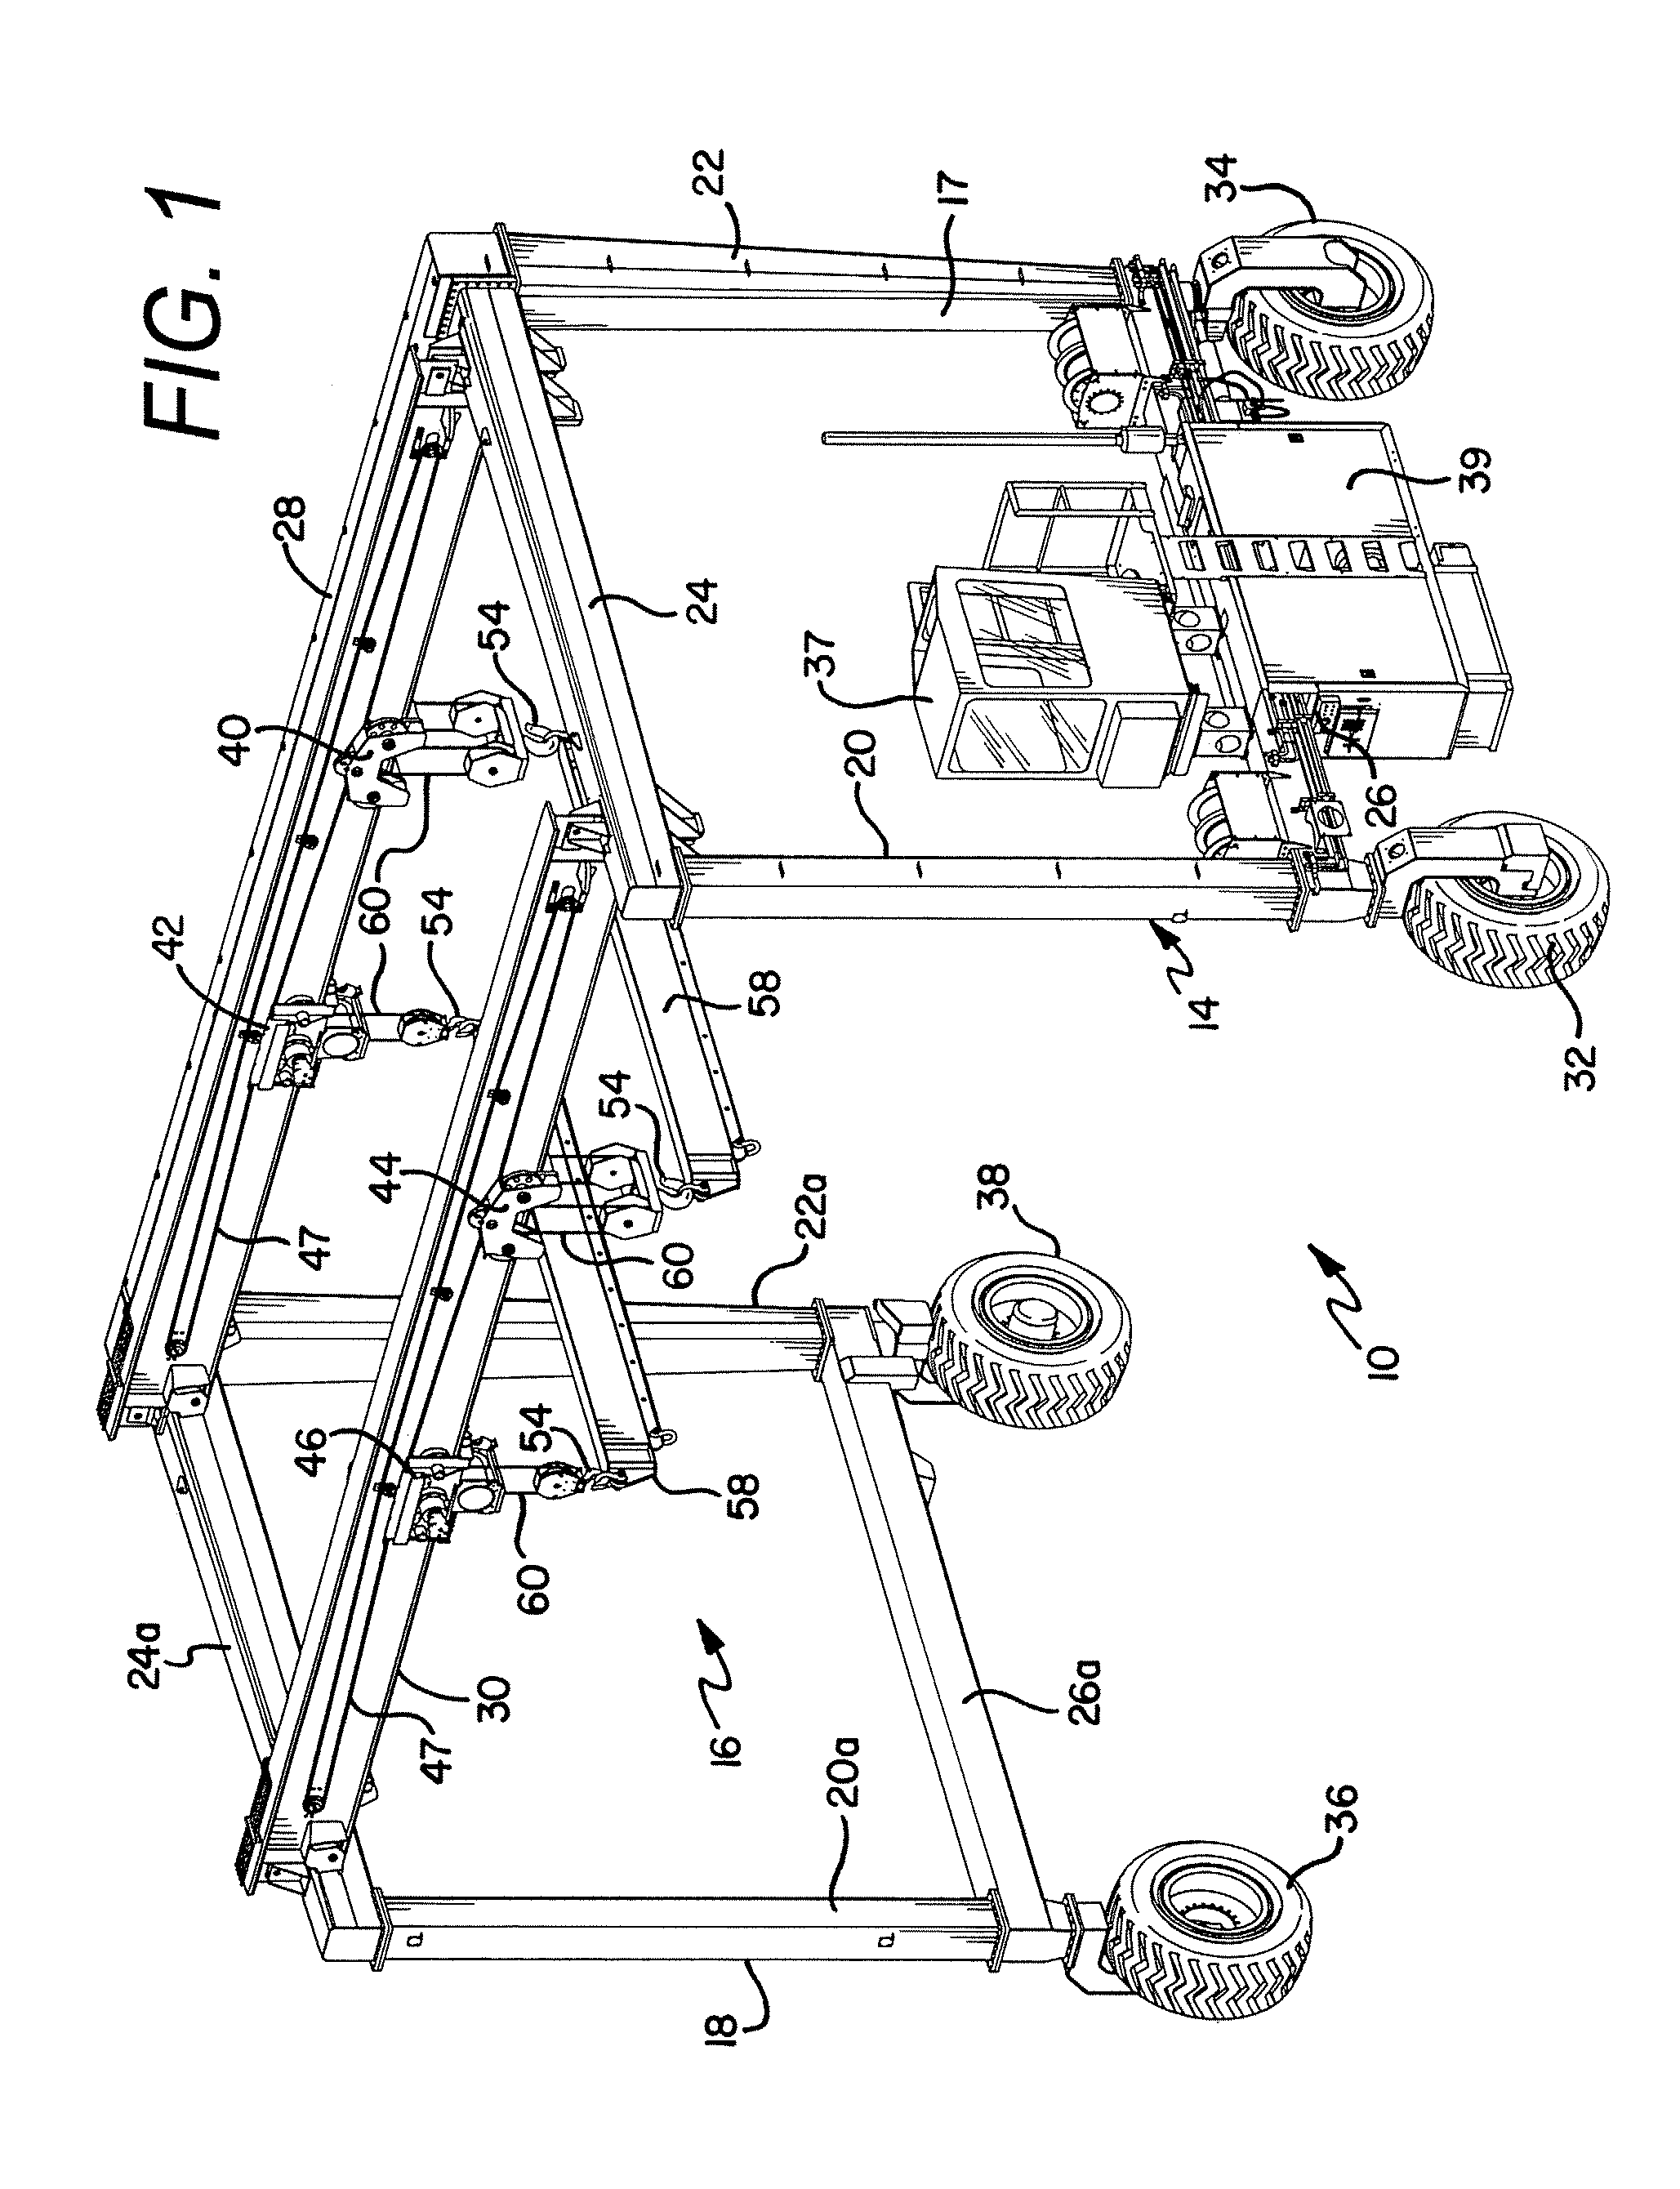 Powered auxiliary hoist mechanism for a gantry crane